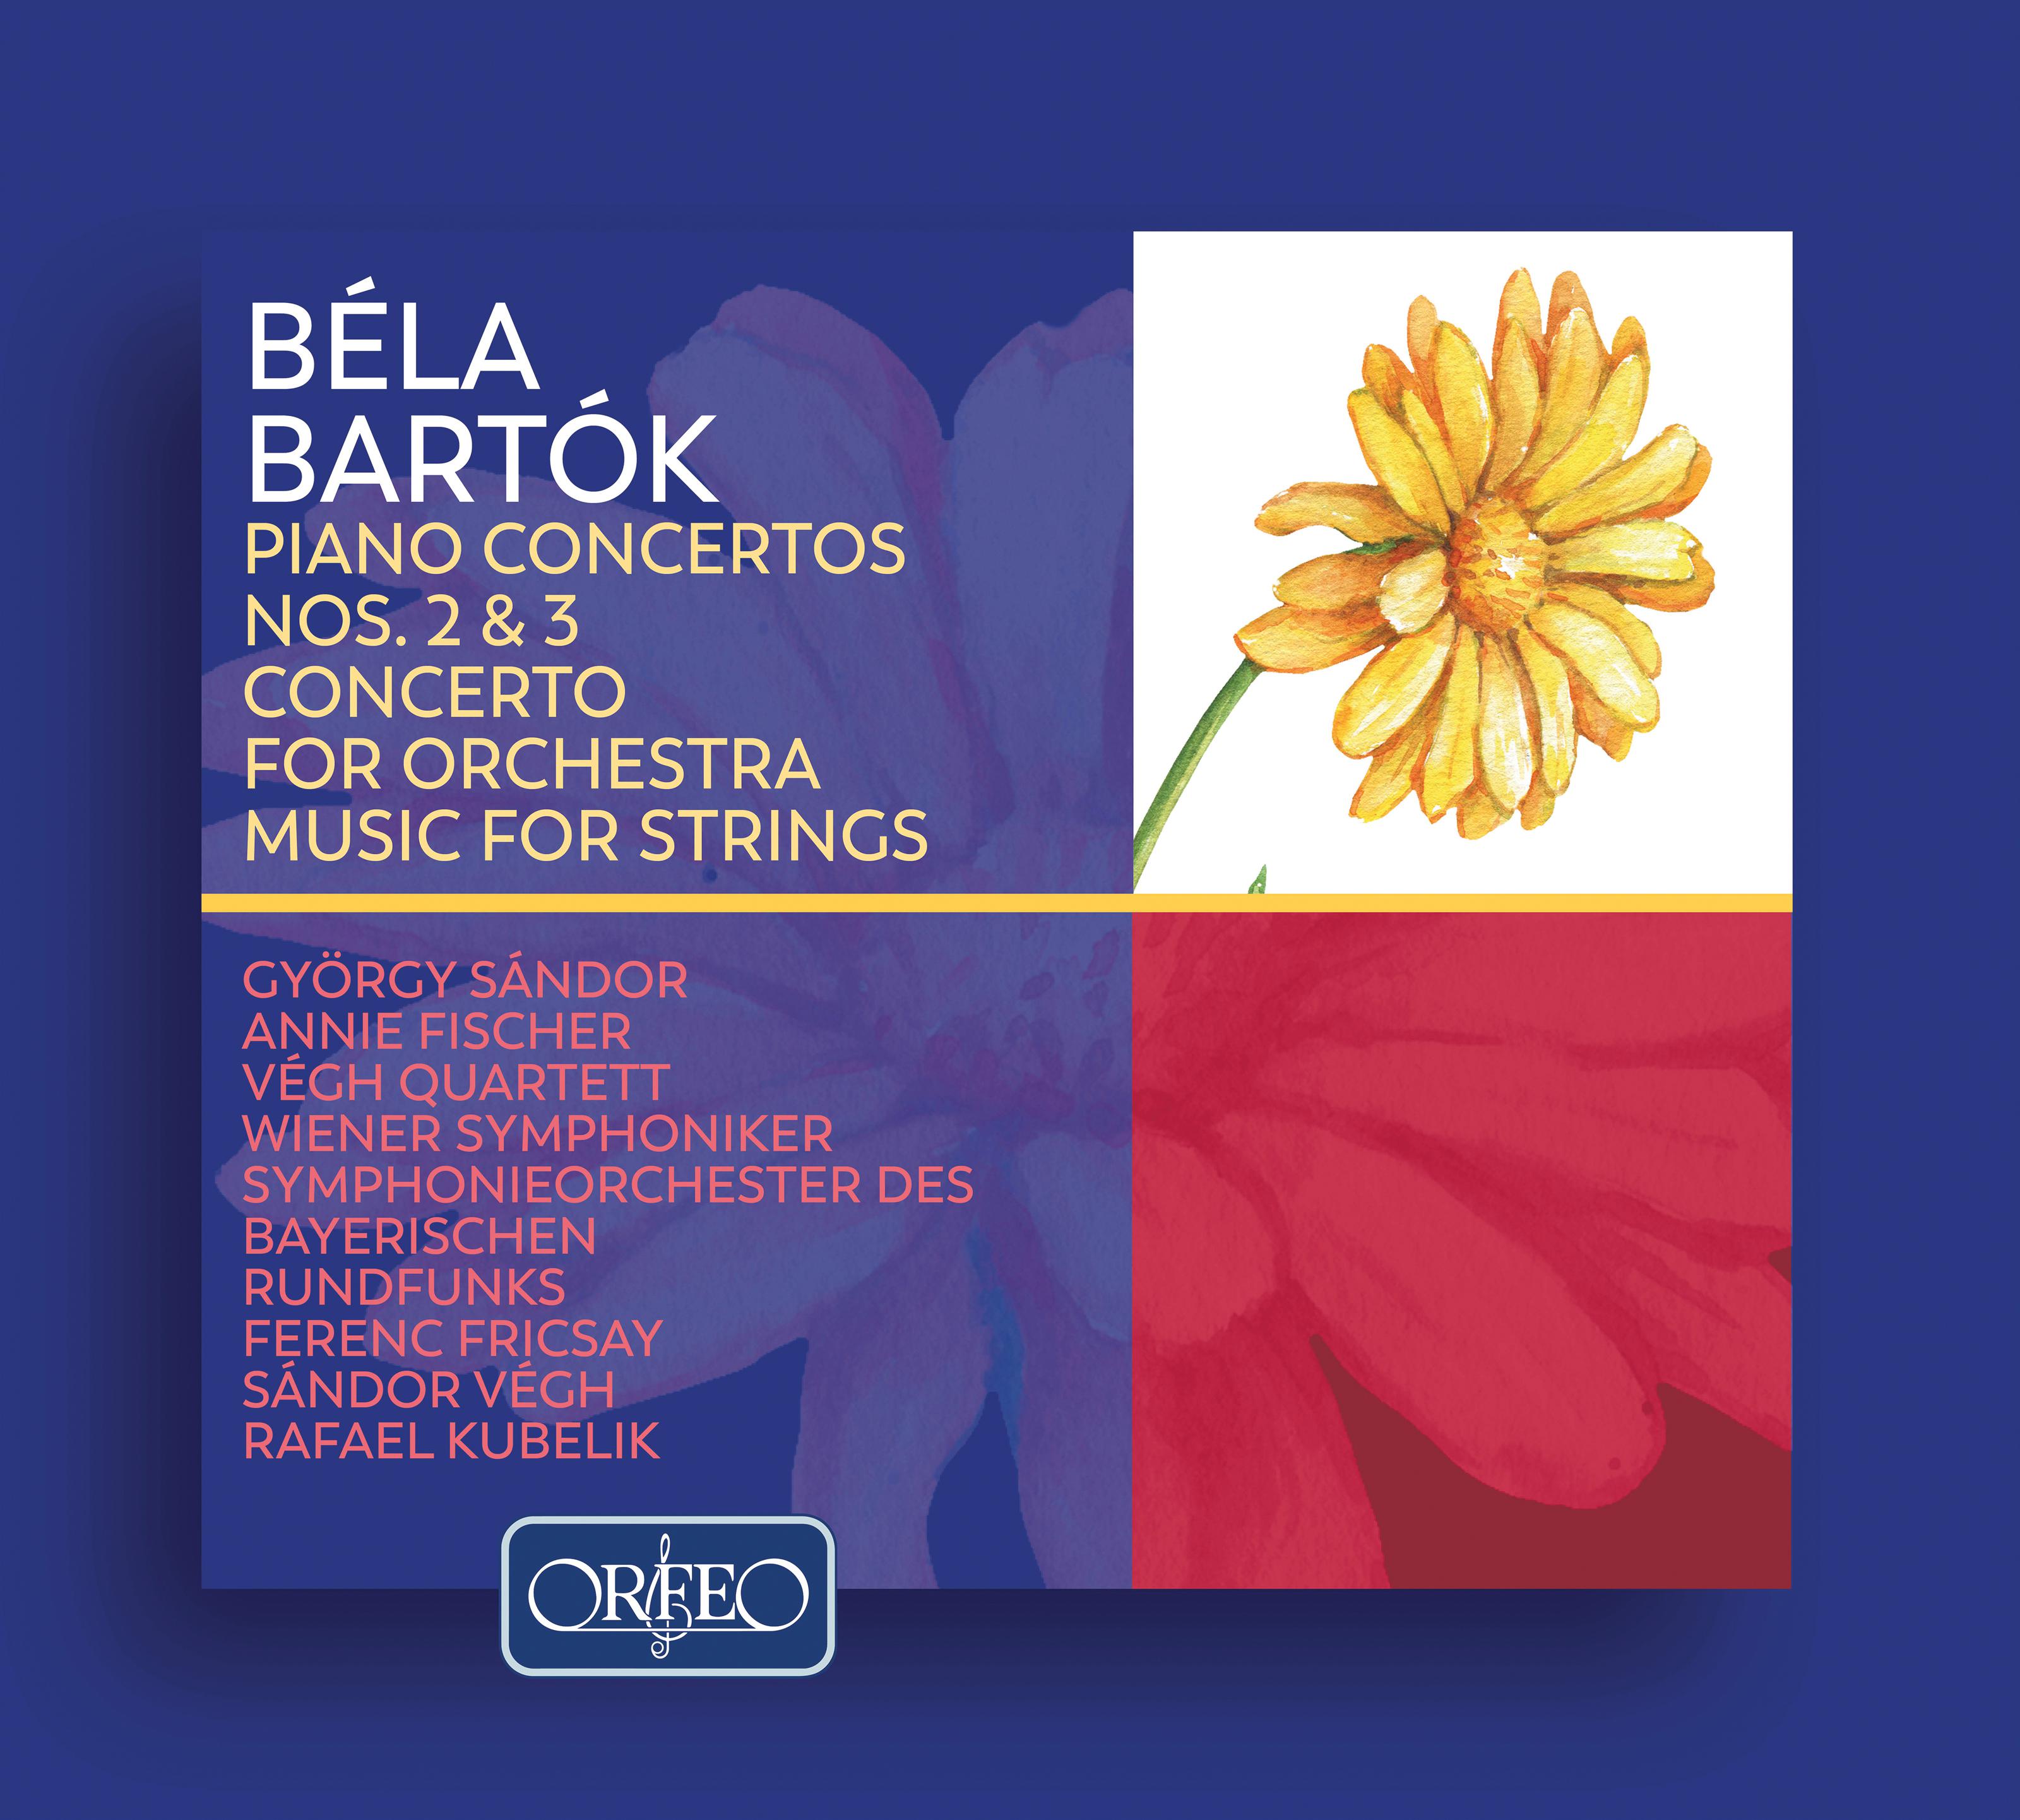 Barto k: Piano Concertos Nos. 2 and 3, Concerto for Orchestra  Music for Strings